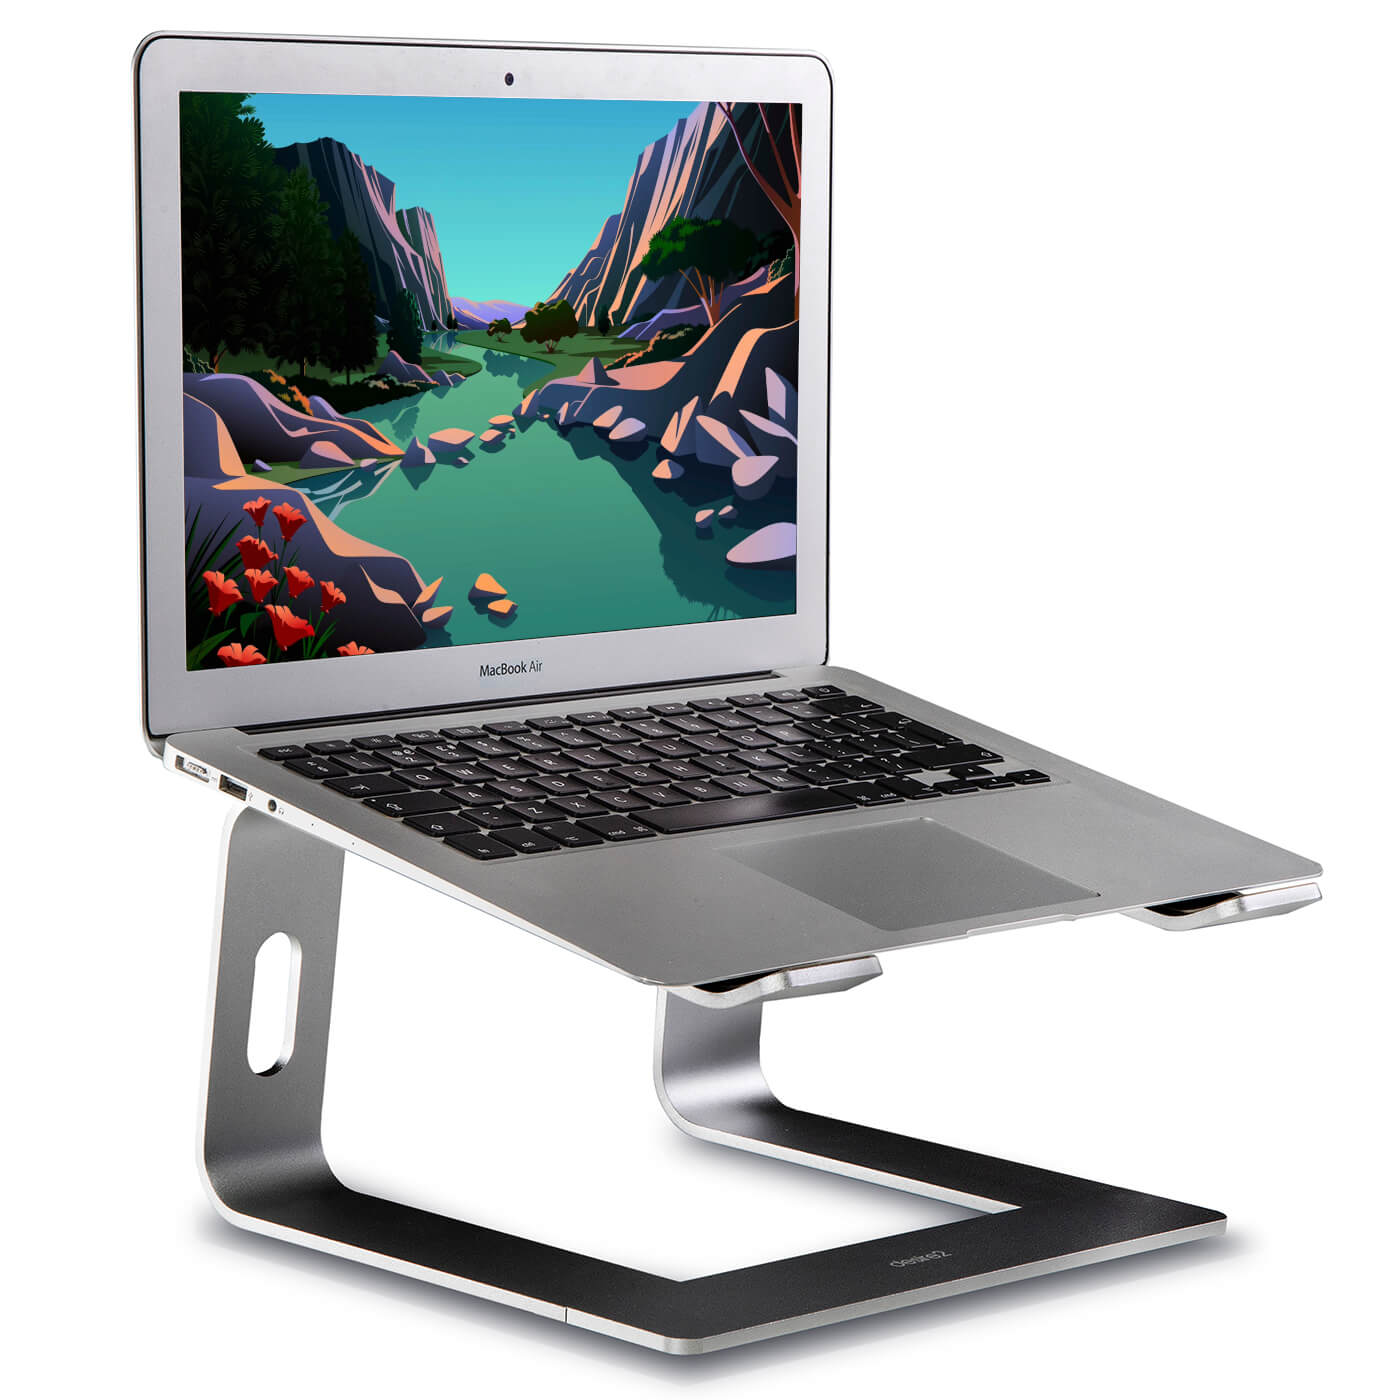 A silver apple macbook air on a well engineered gun metal aluminium laptop stand